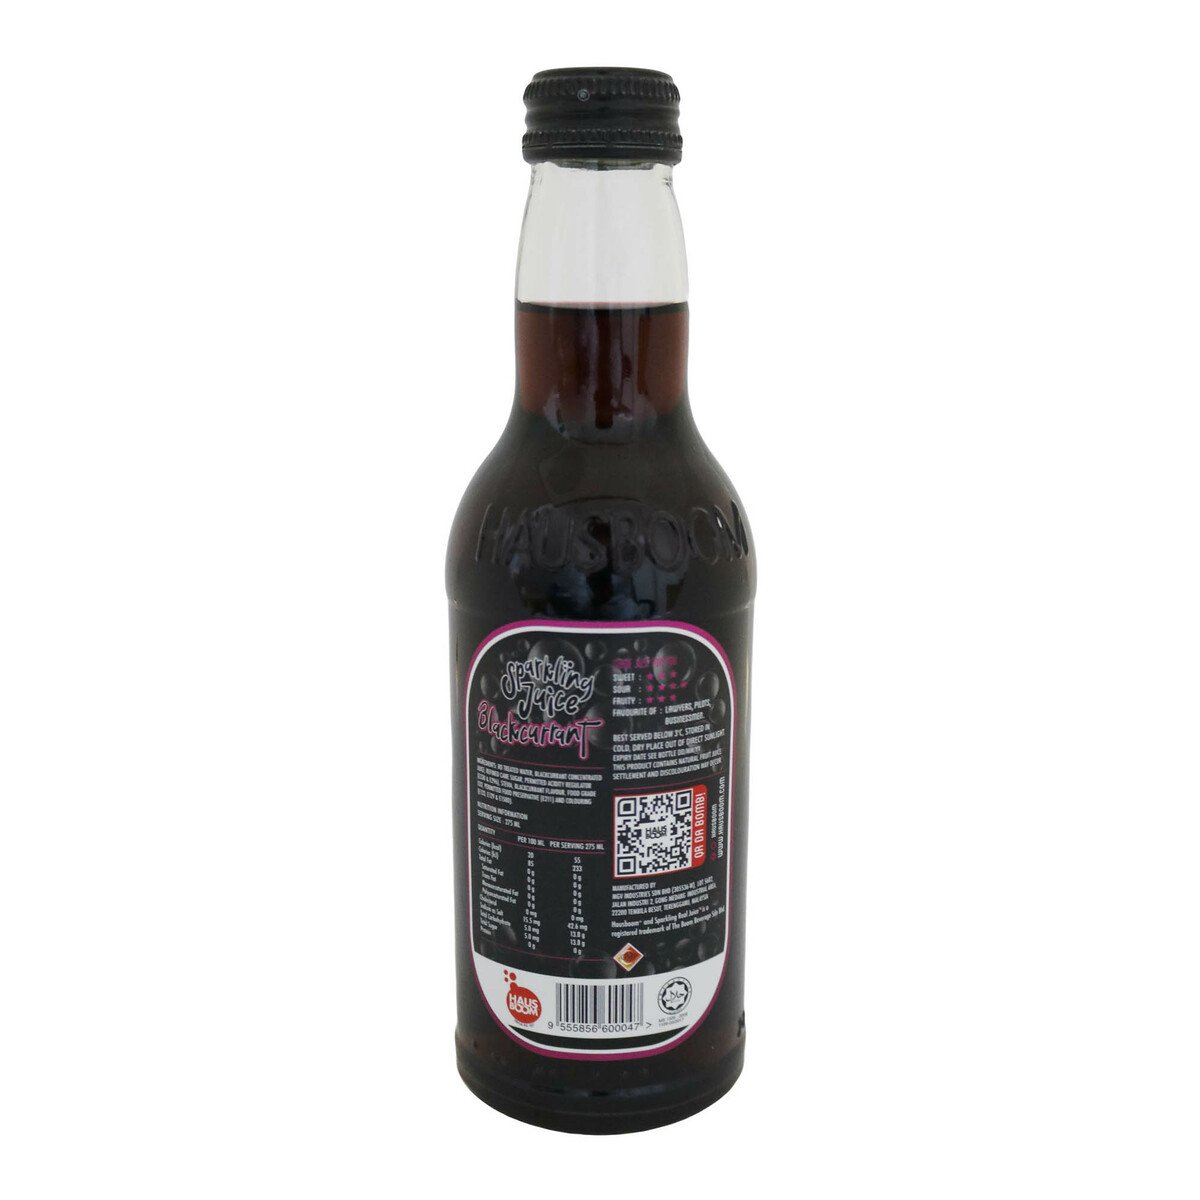 Hausboom Blackcurrent Bottle 275ml